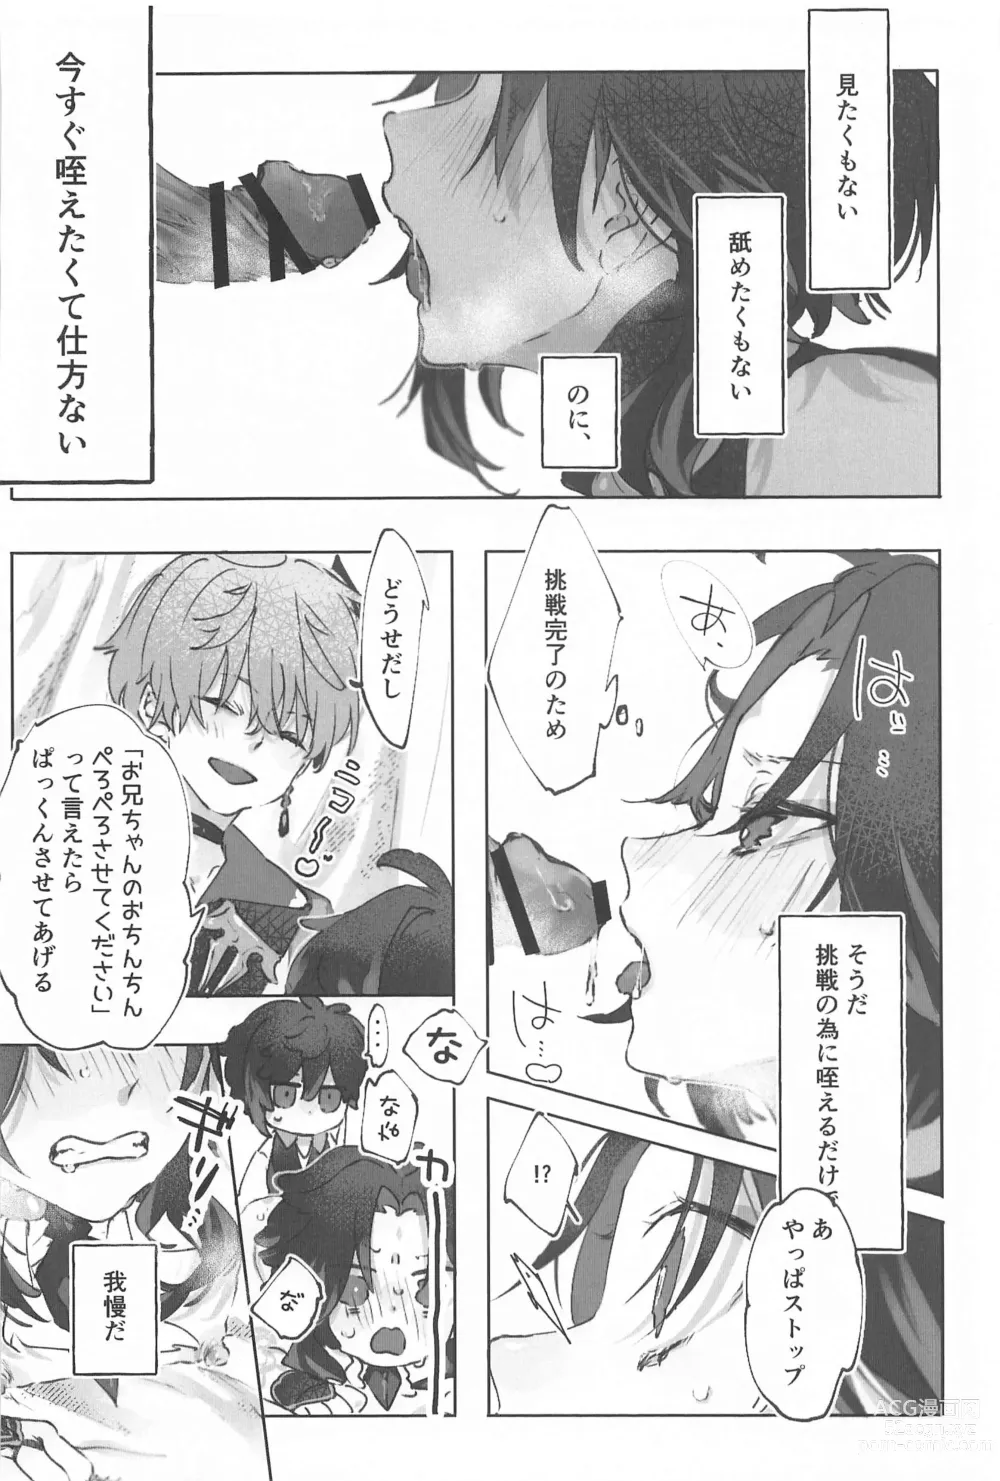 Page 34 of doujinshi Okawari.